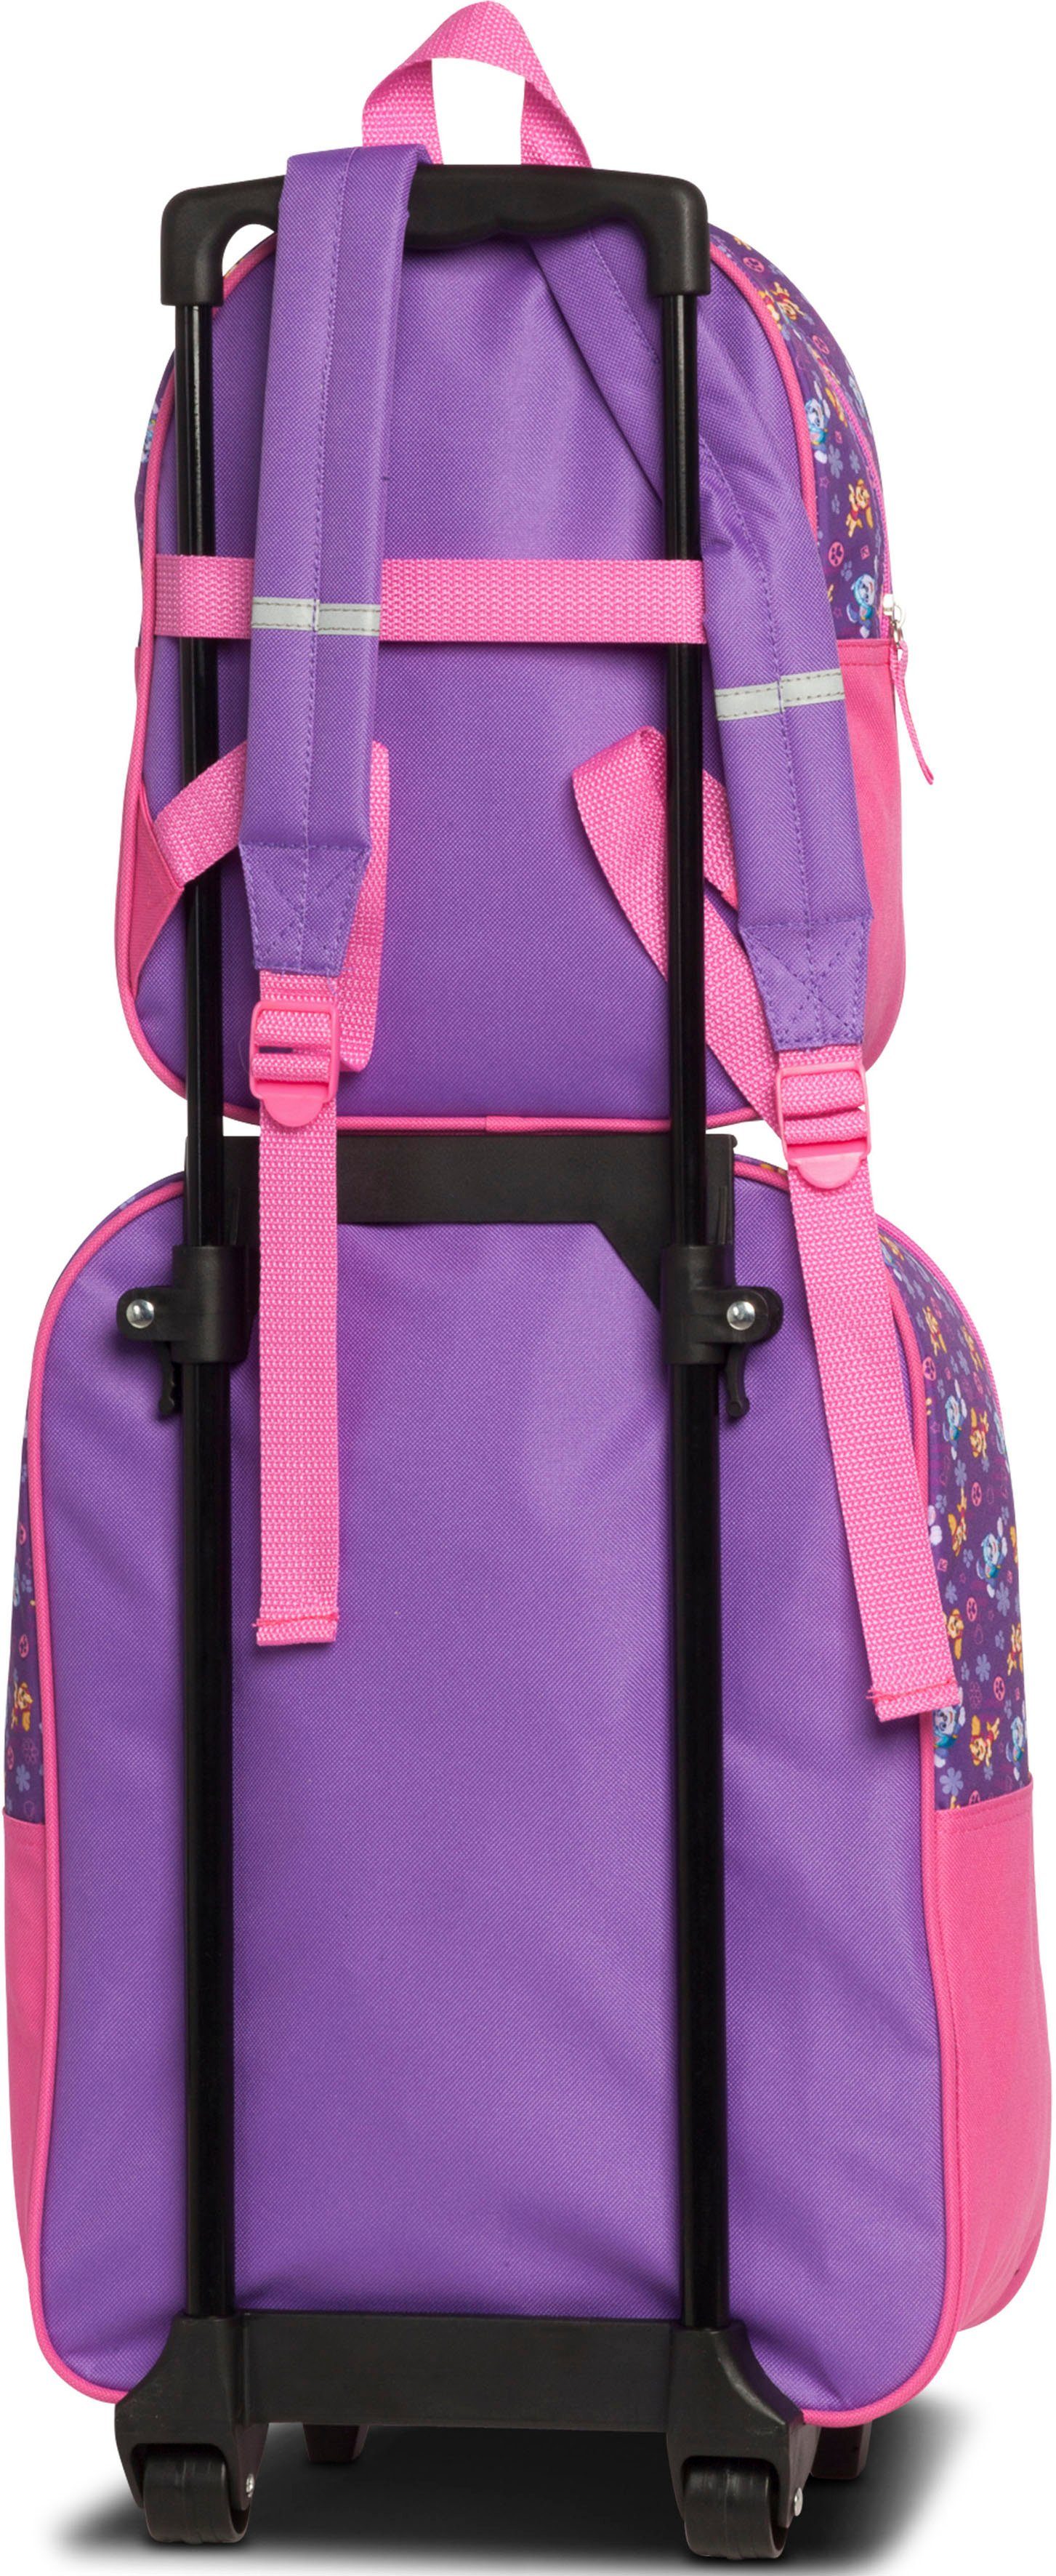 fabrizio® Kinderkoffer & Patrol, violett/pink, 2 Viacom, Kinderreise-Set, Rollen, Rucksack Trolley Paw